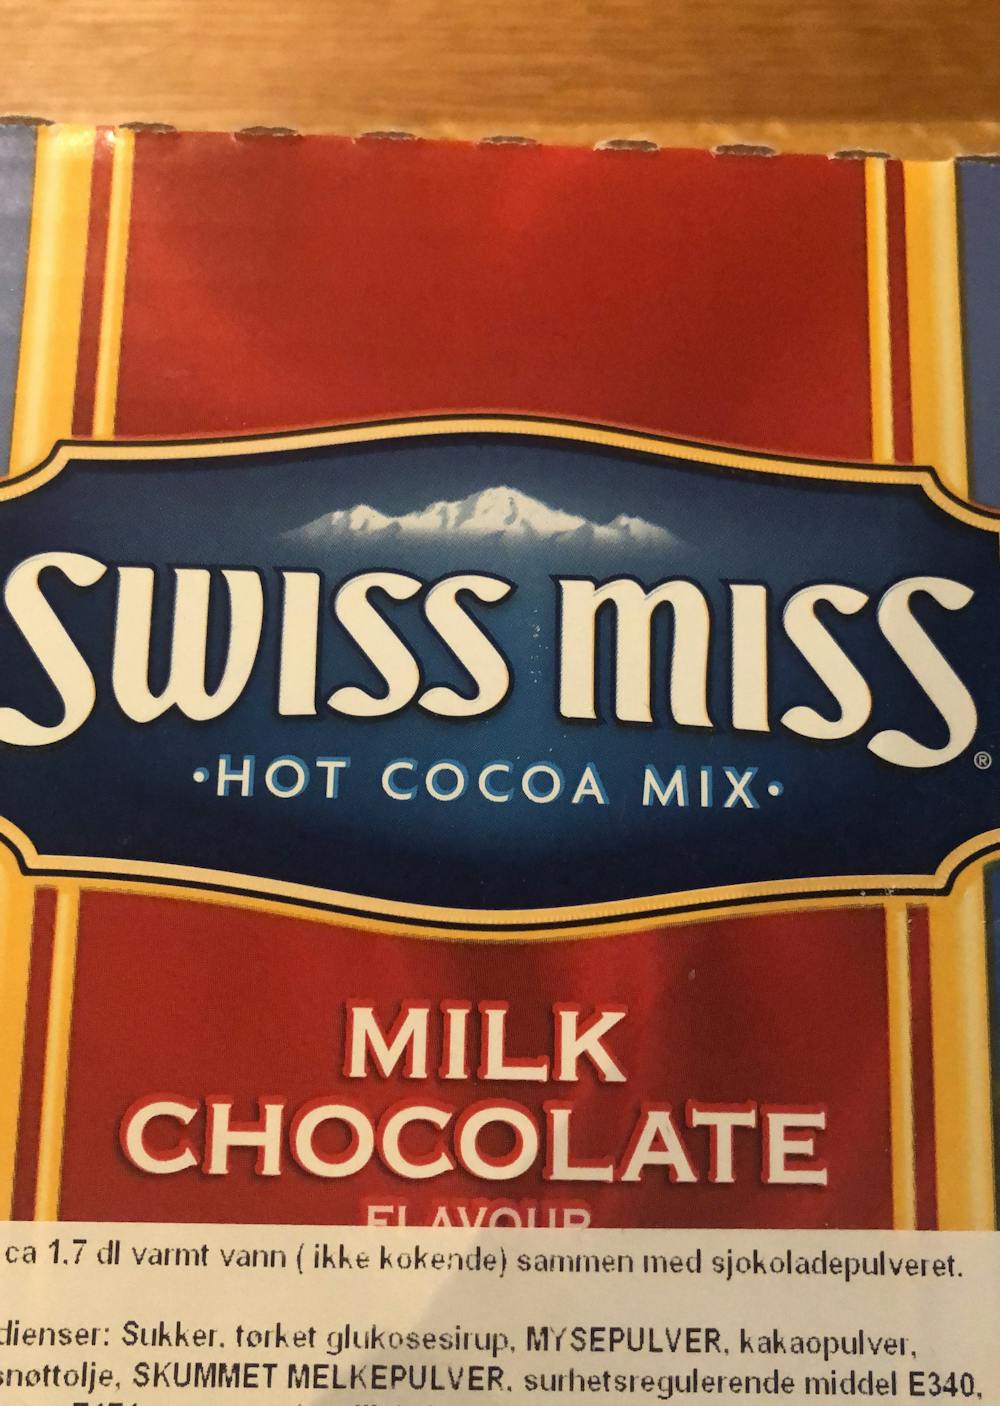 Milk chocolate , hot cocoa mix, Swiss miss